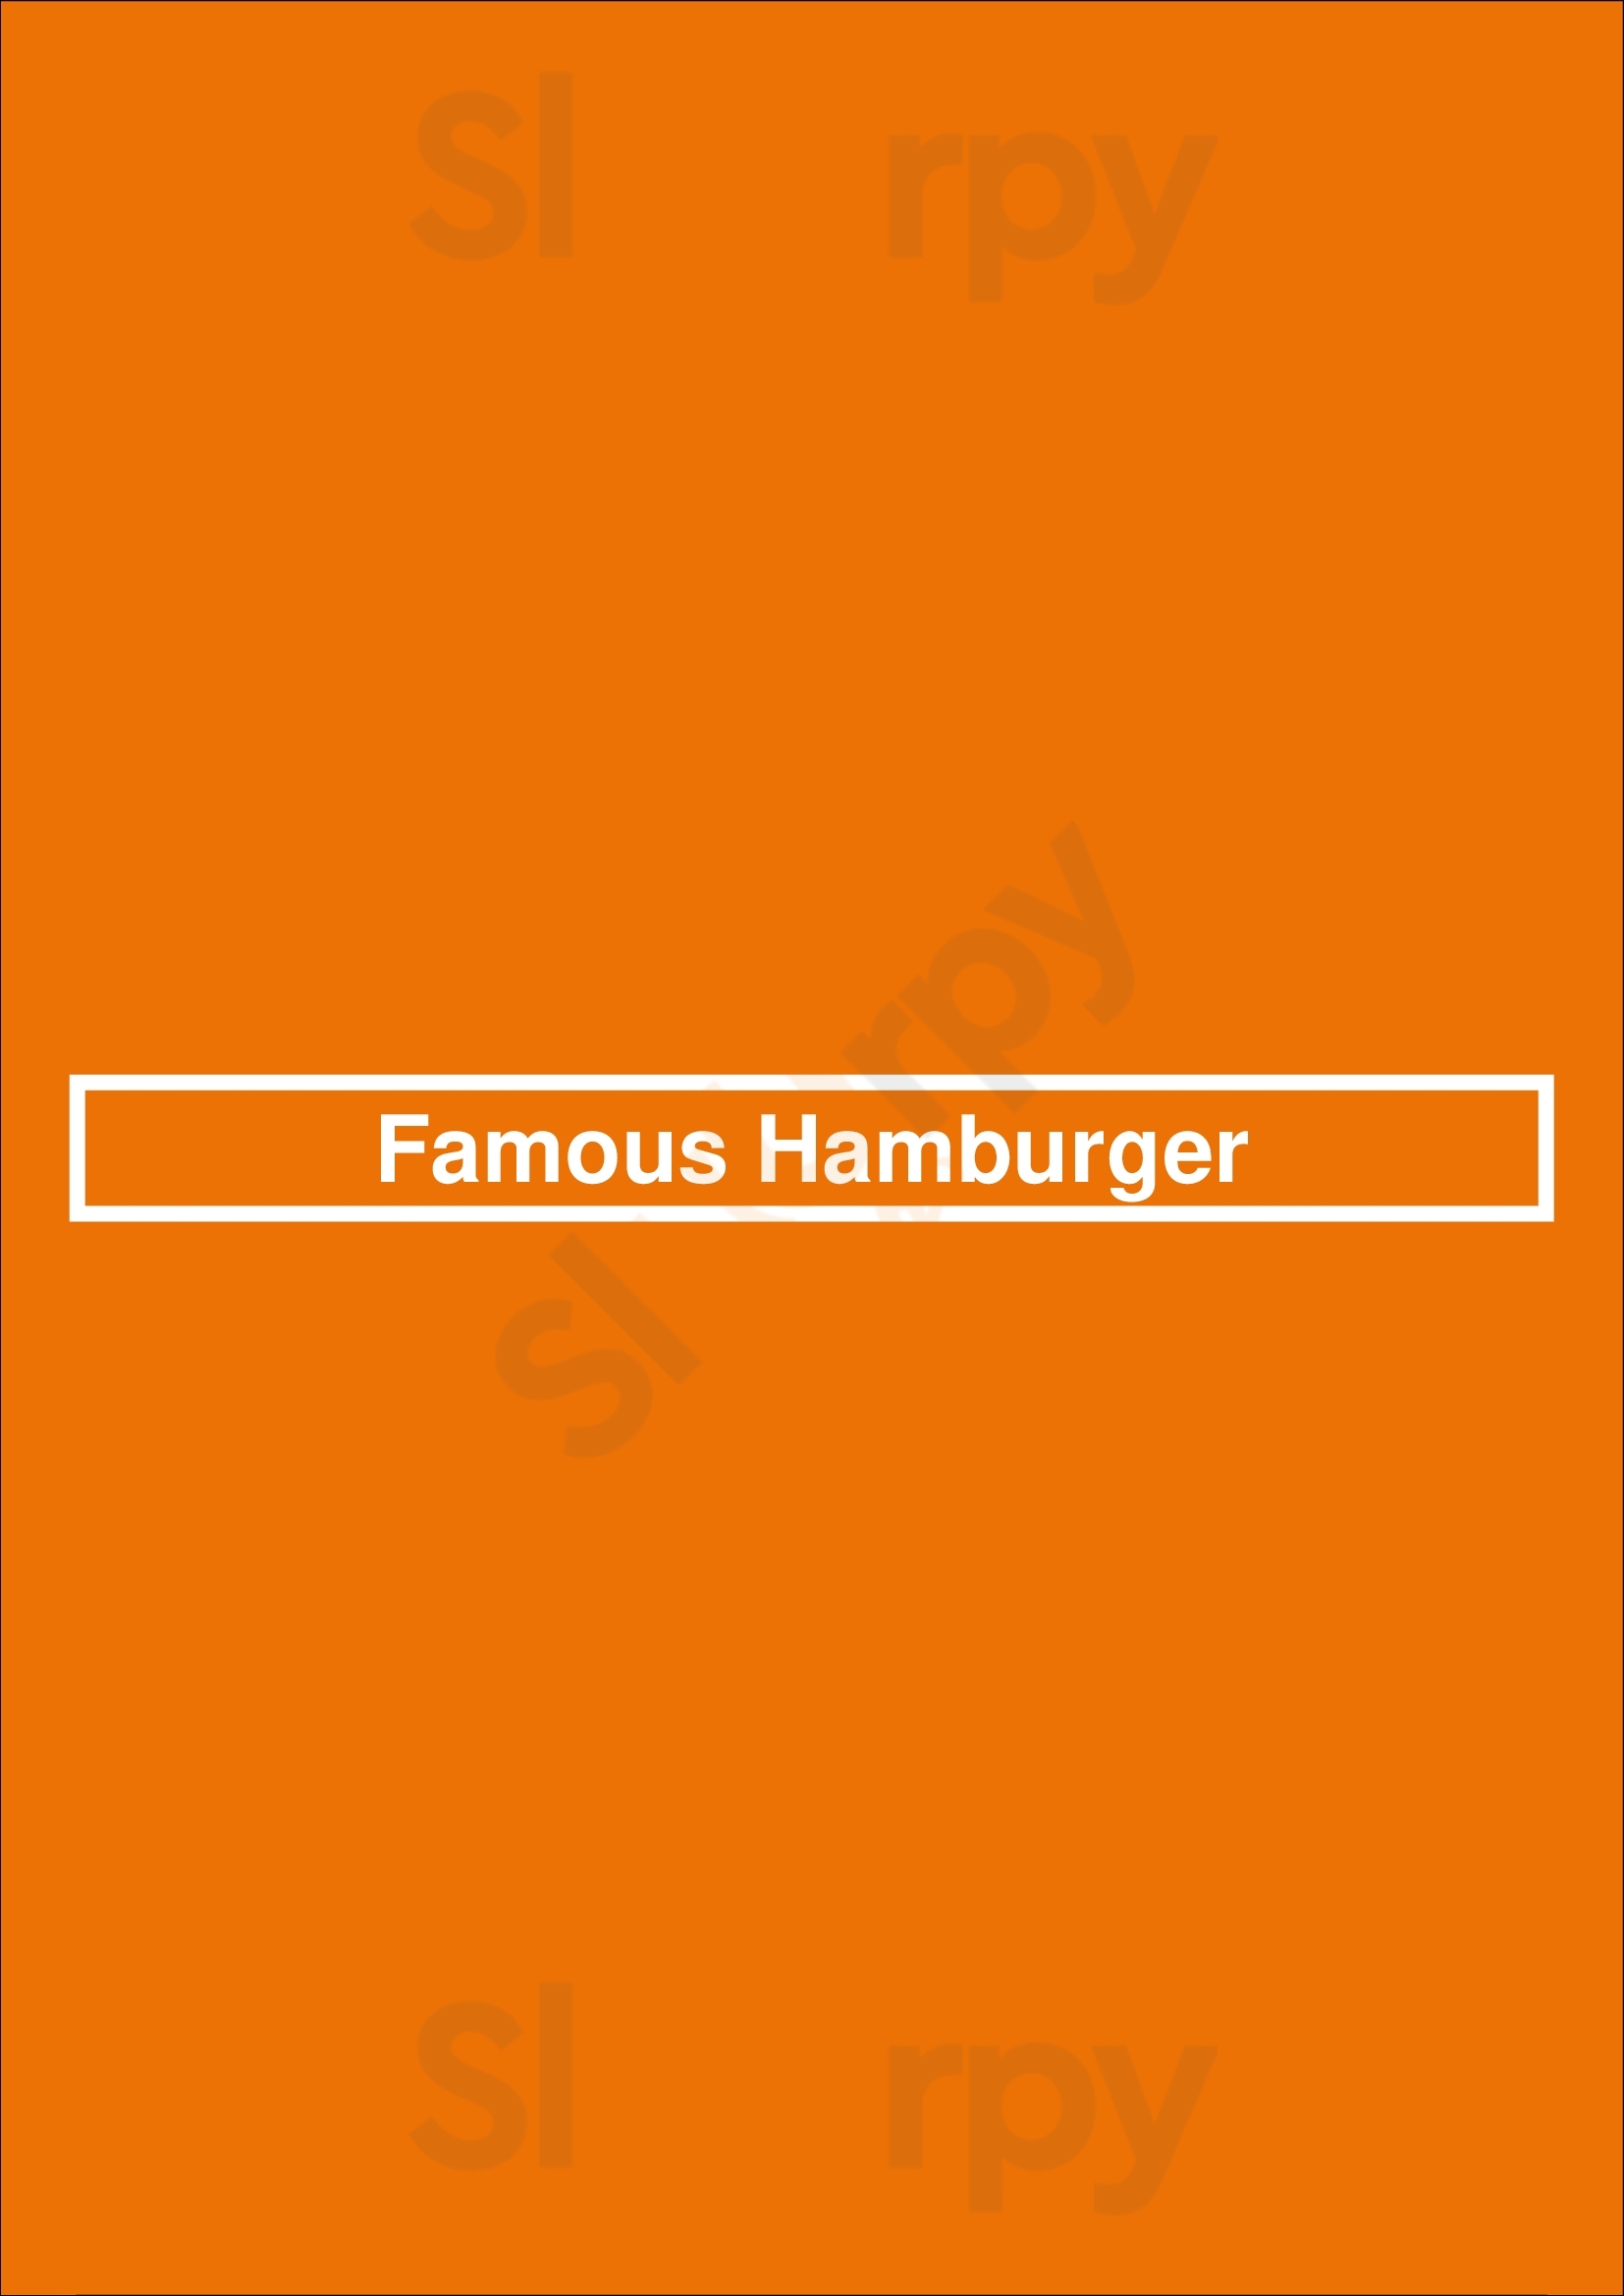 Famous Hamburger Canton Menu - 1